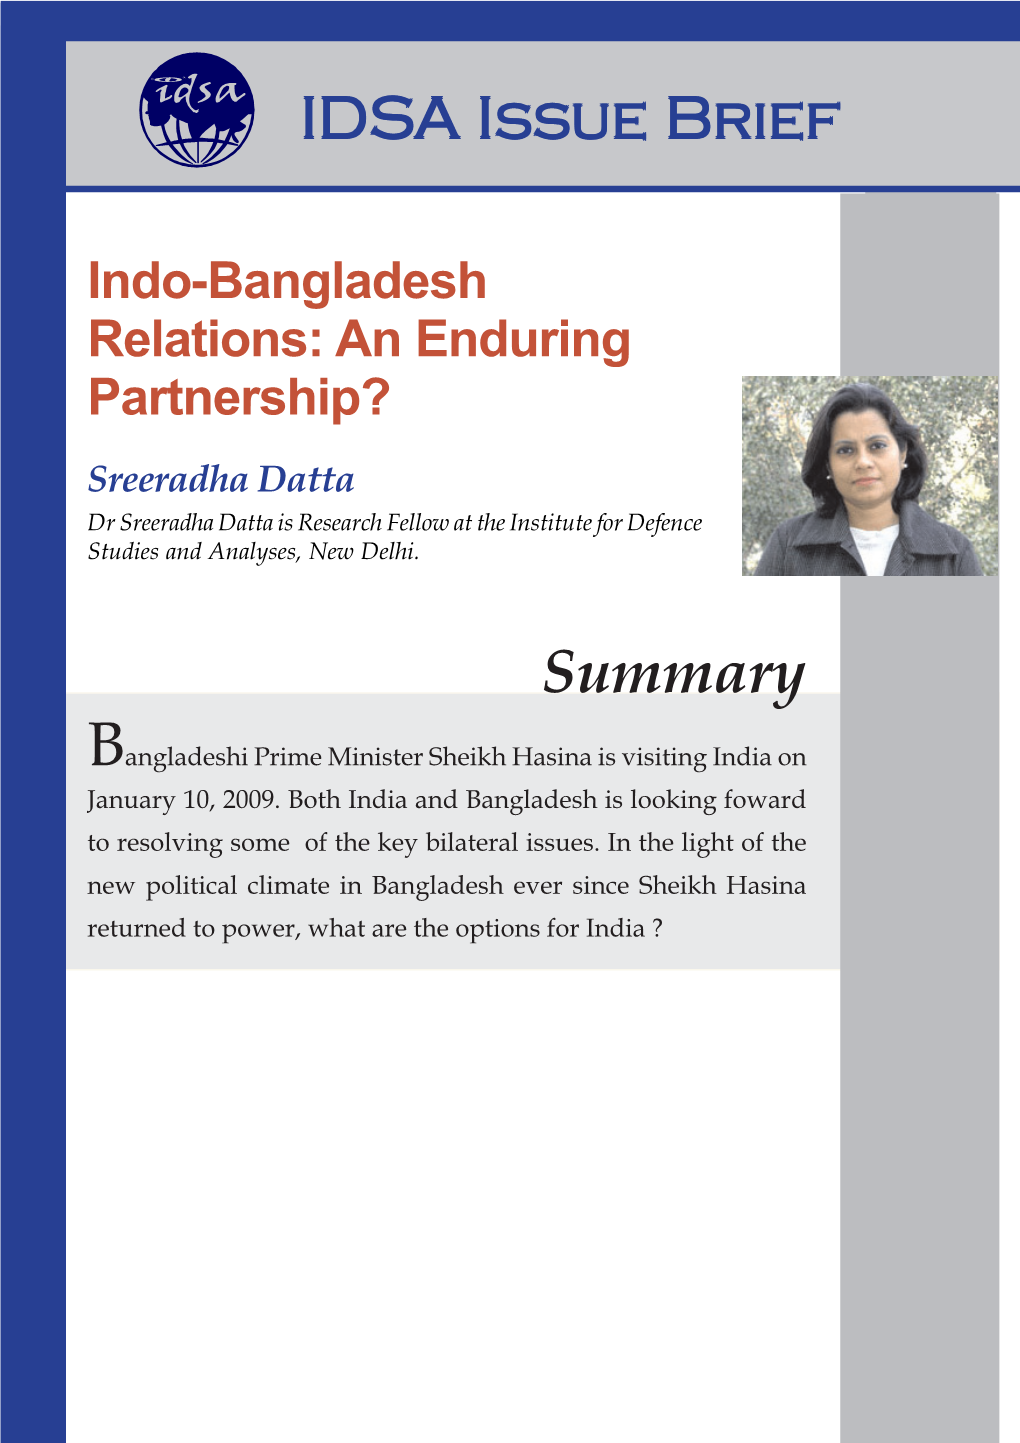 Indo-Bangladesh Relations: an Enduring Partnership?